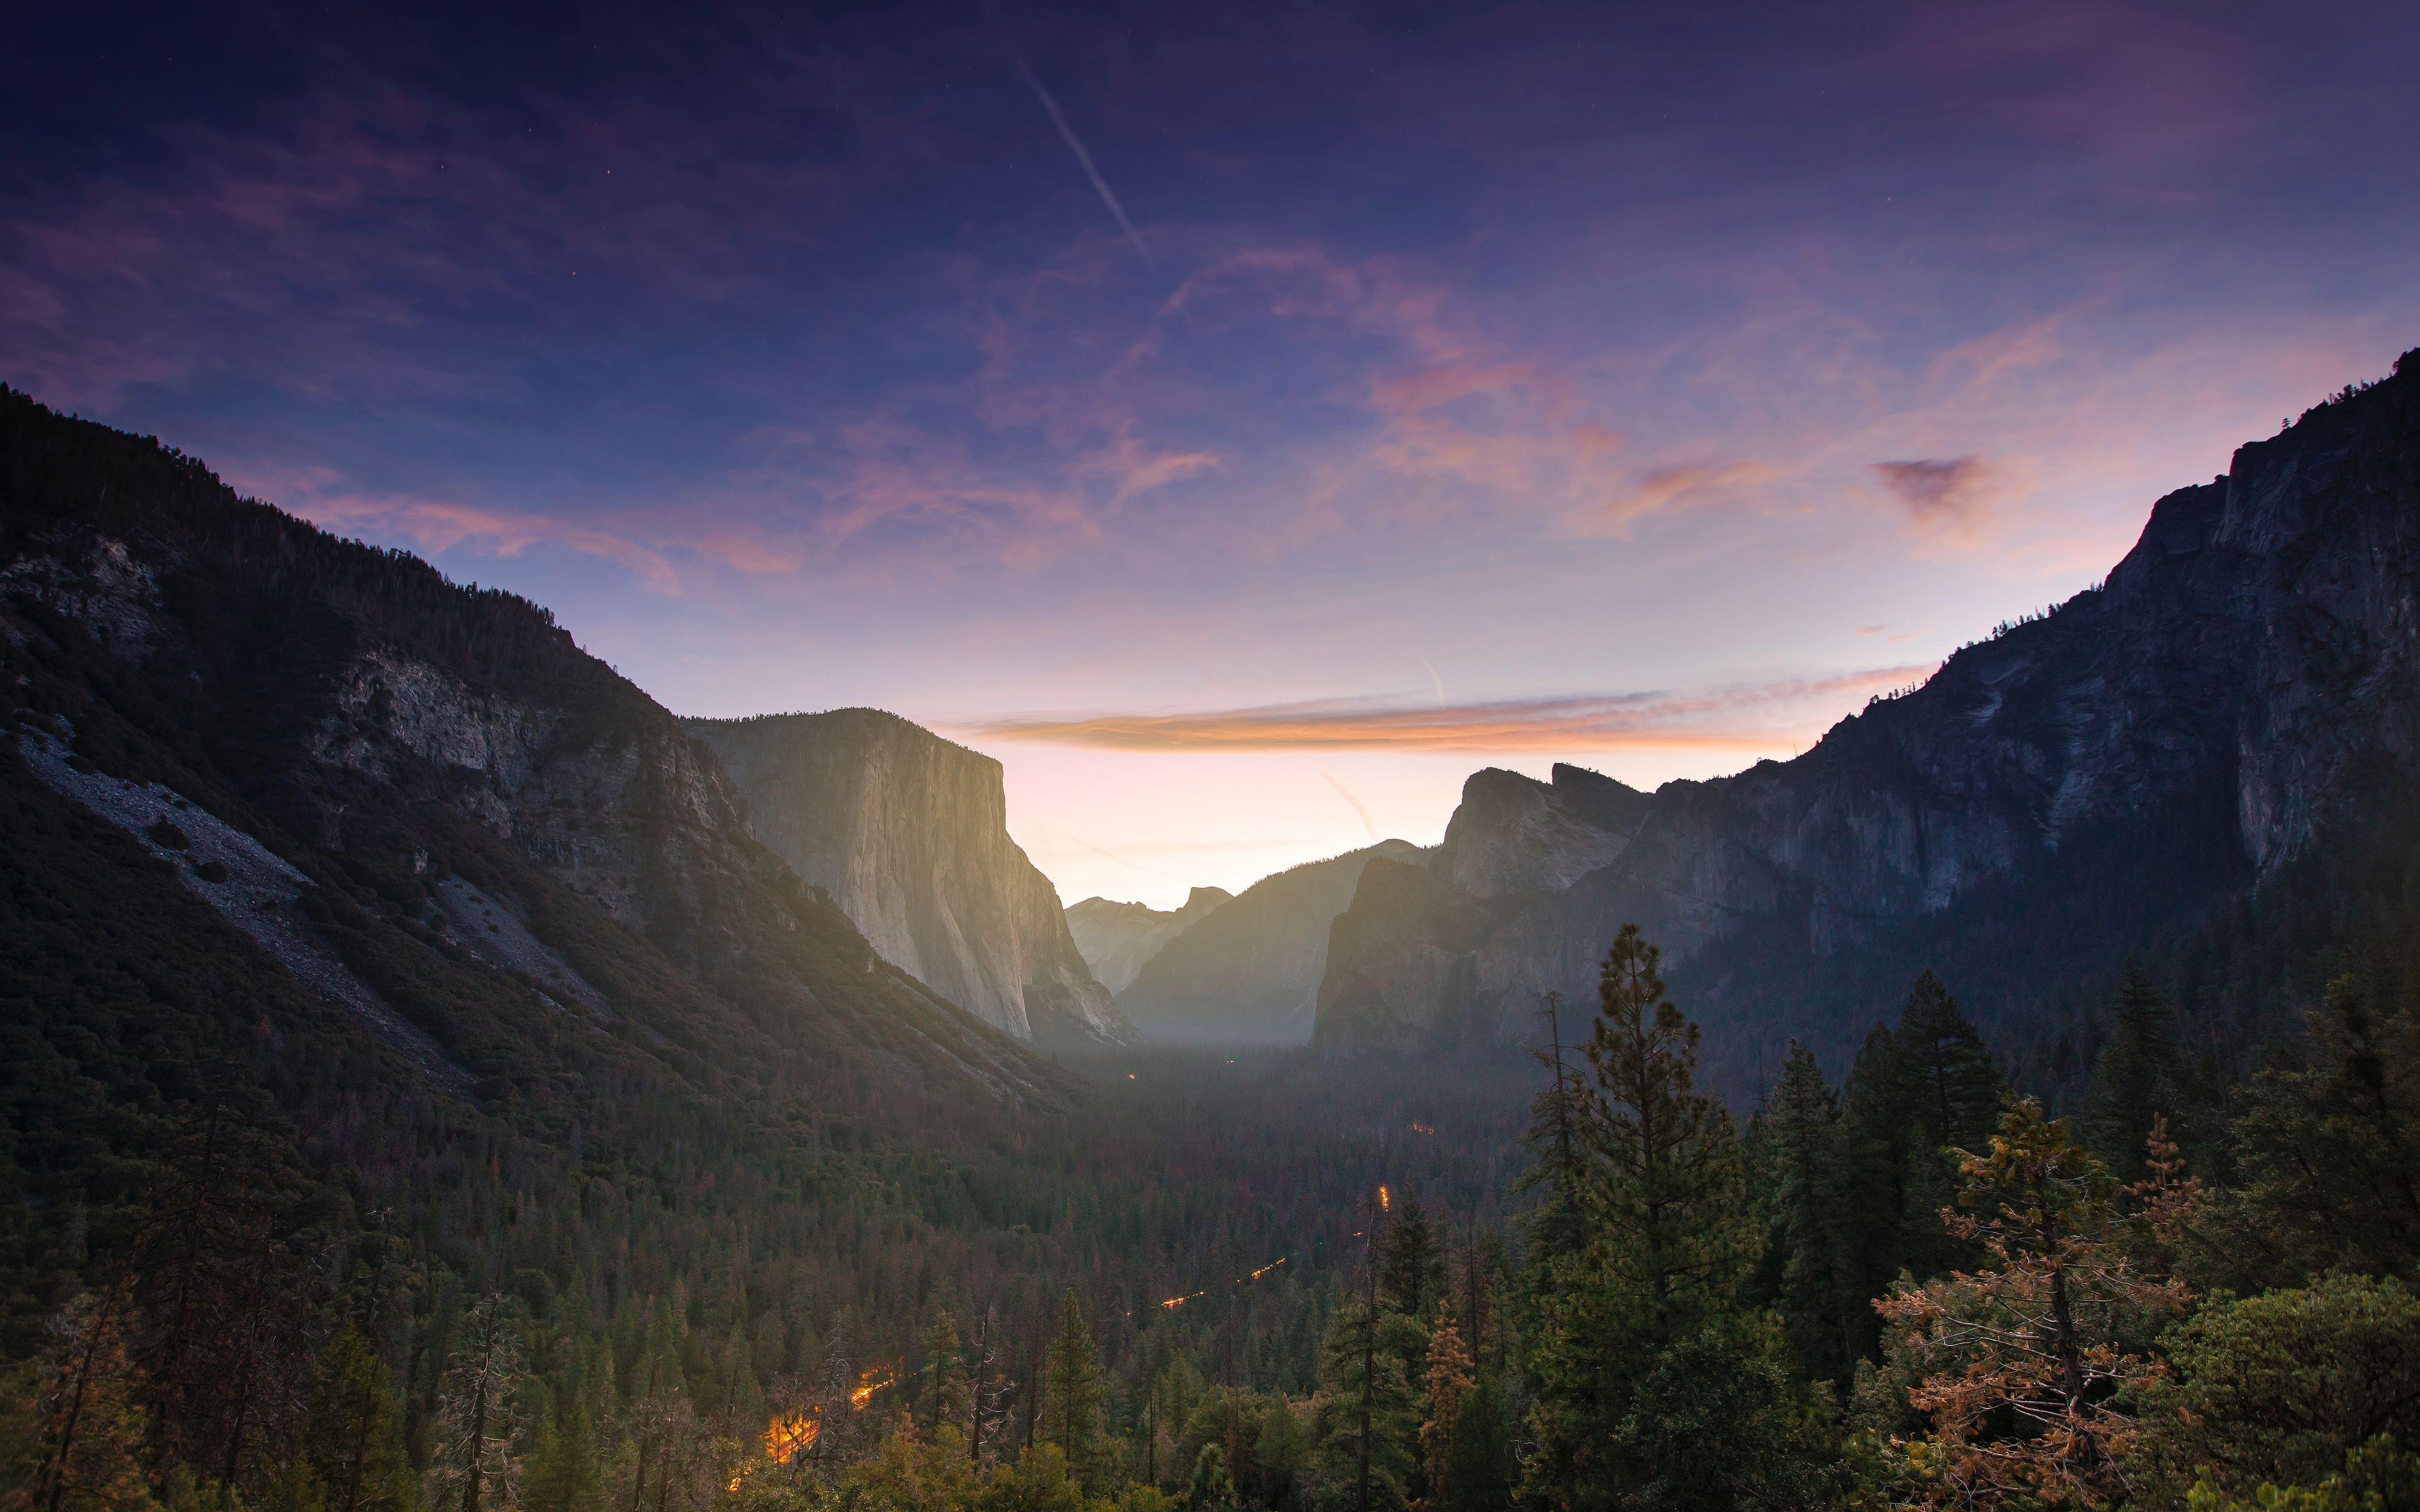 Download wallpaper 4k, Yosemite Valley, sunset, autumn